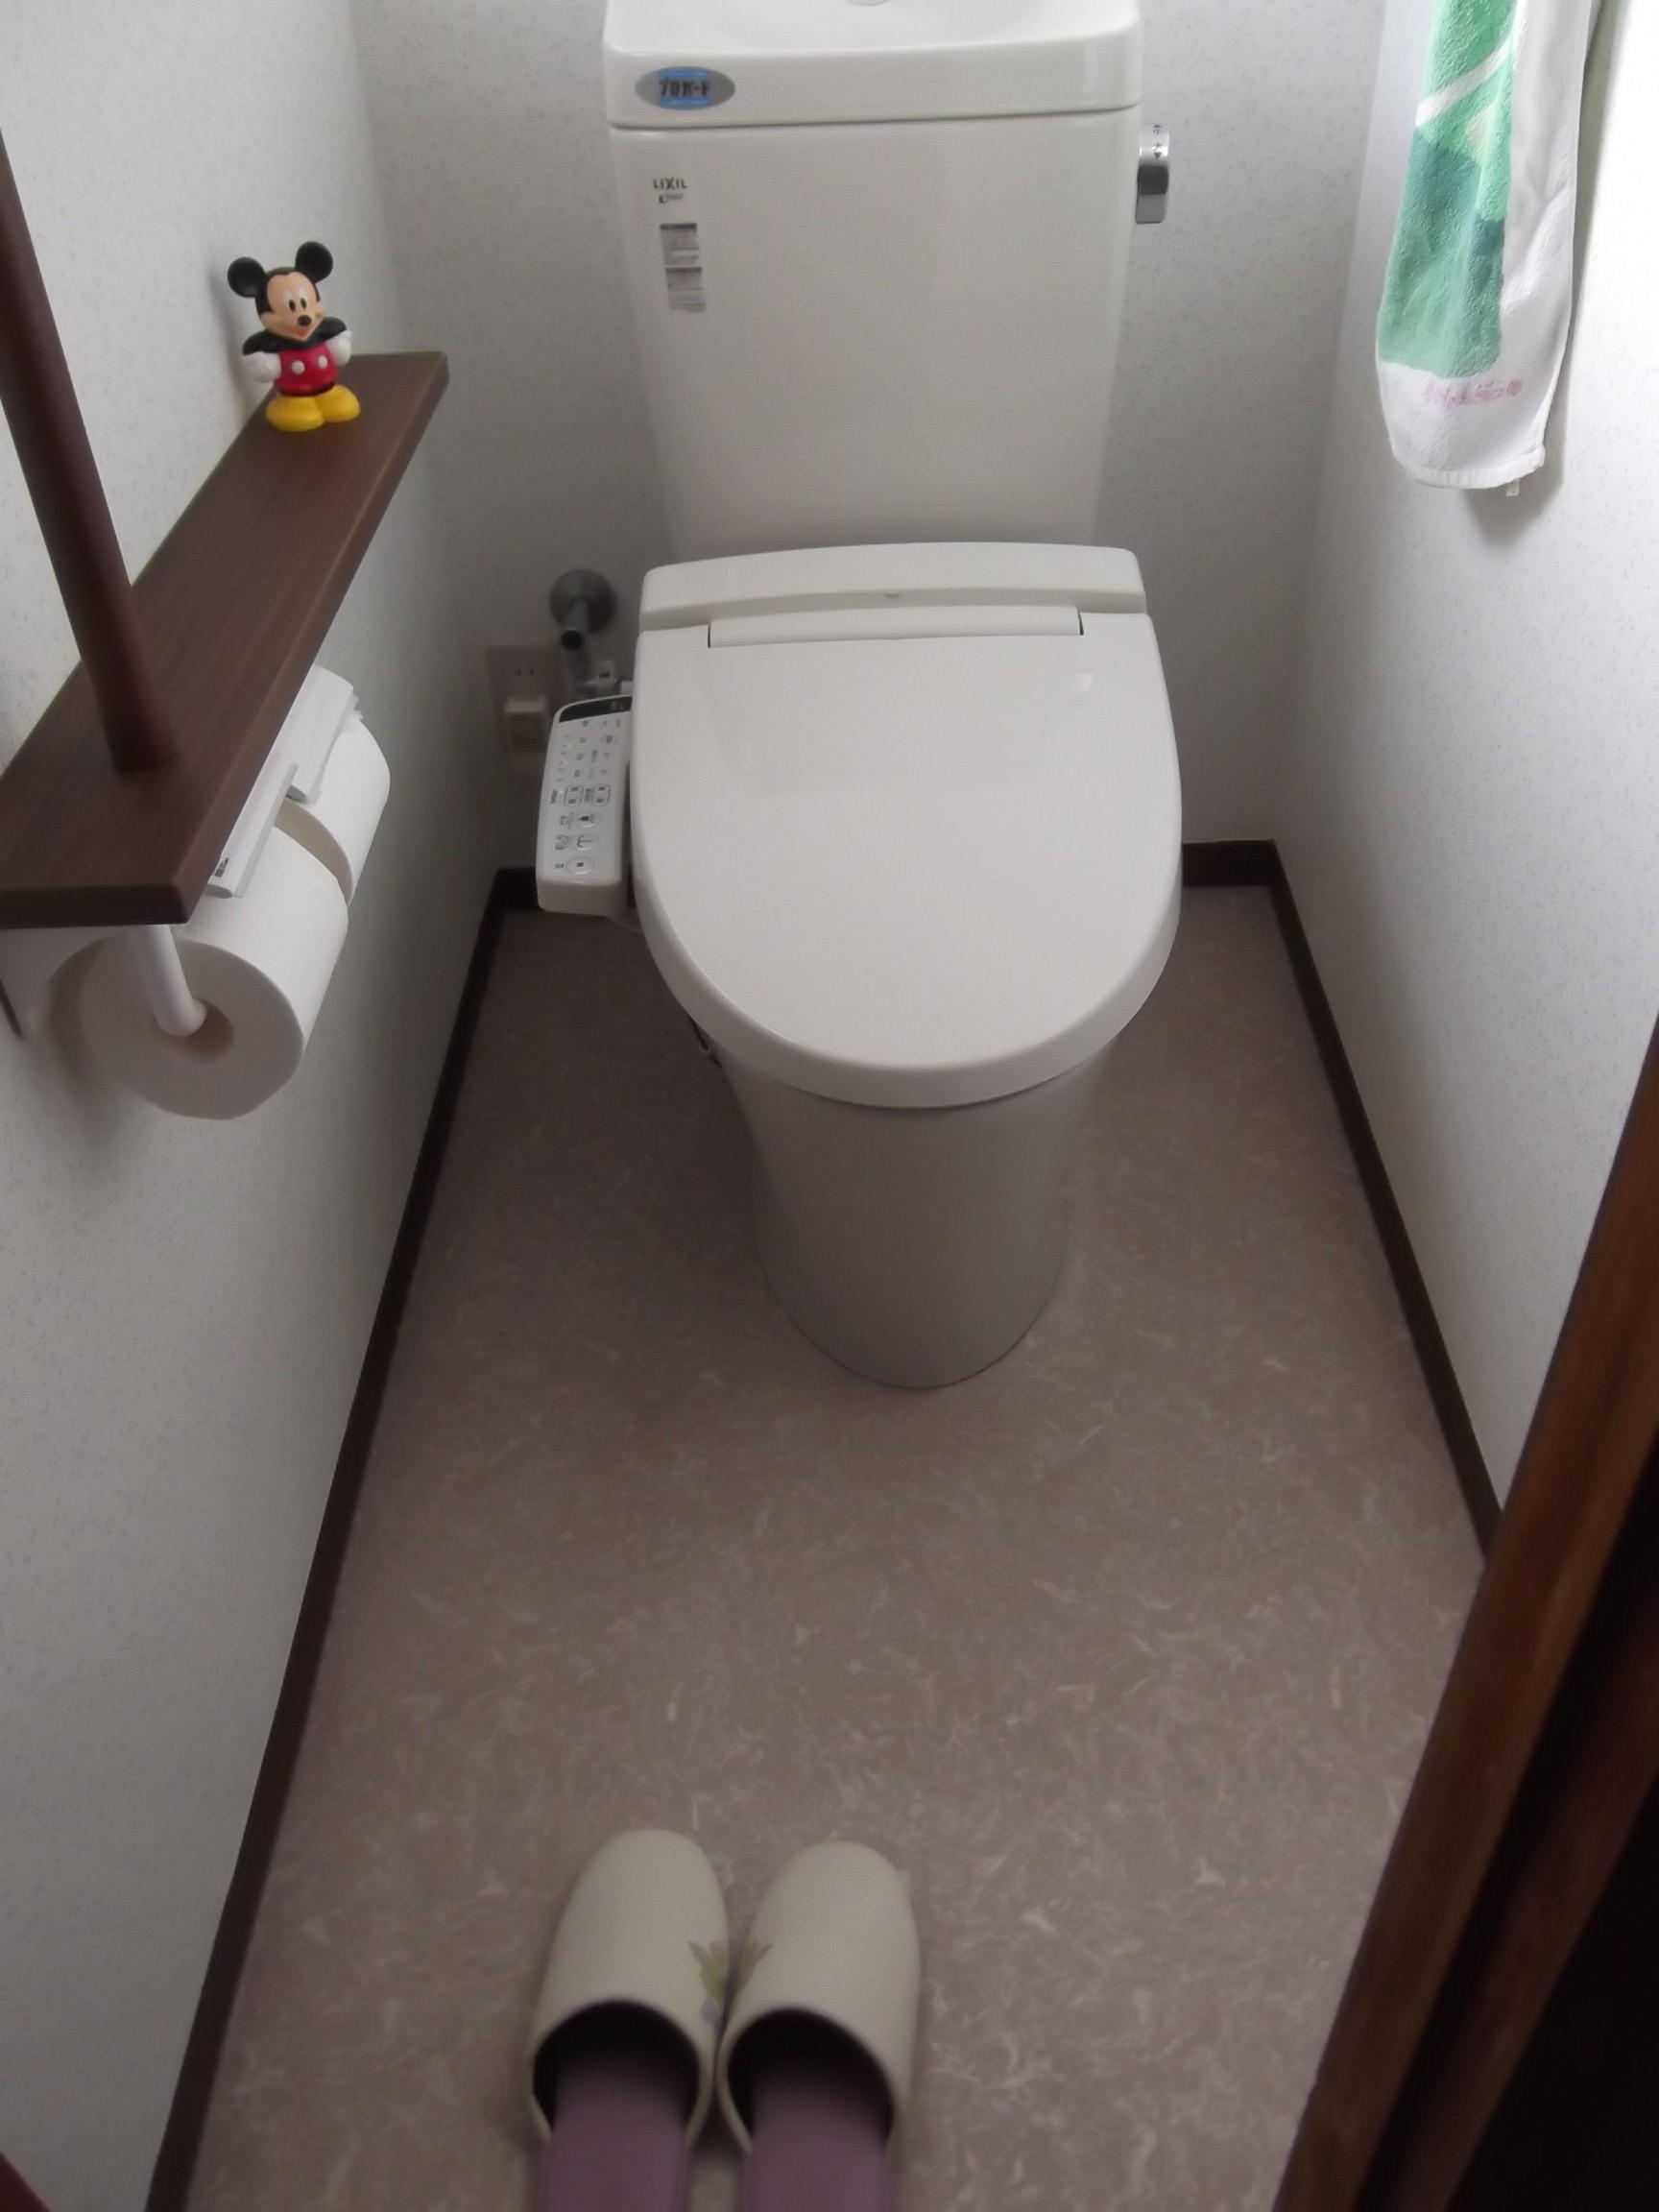 U様邸。和式トイレから洋式トイレへのリフォーム事例です。